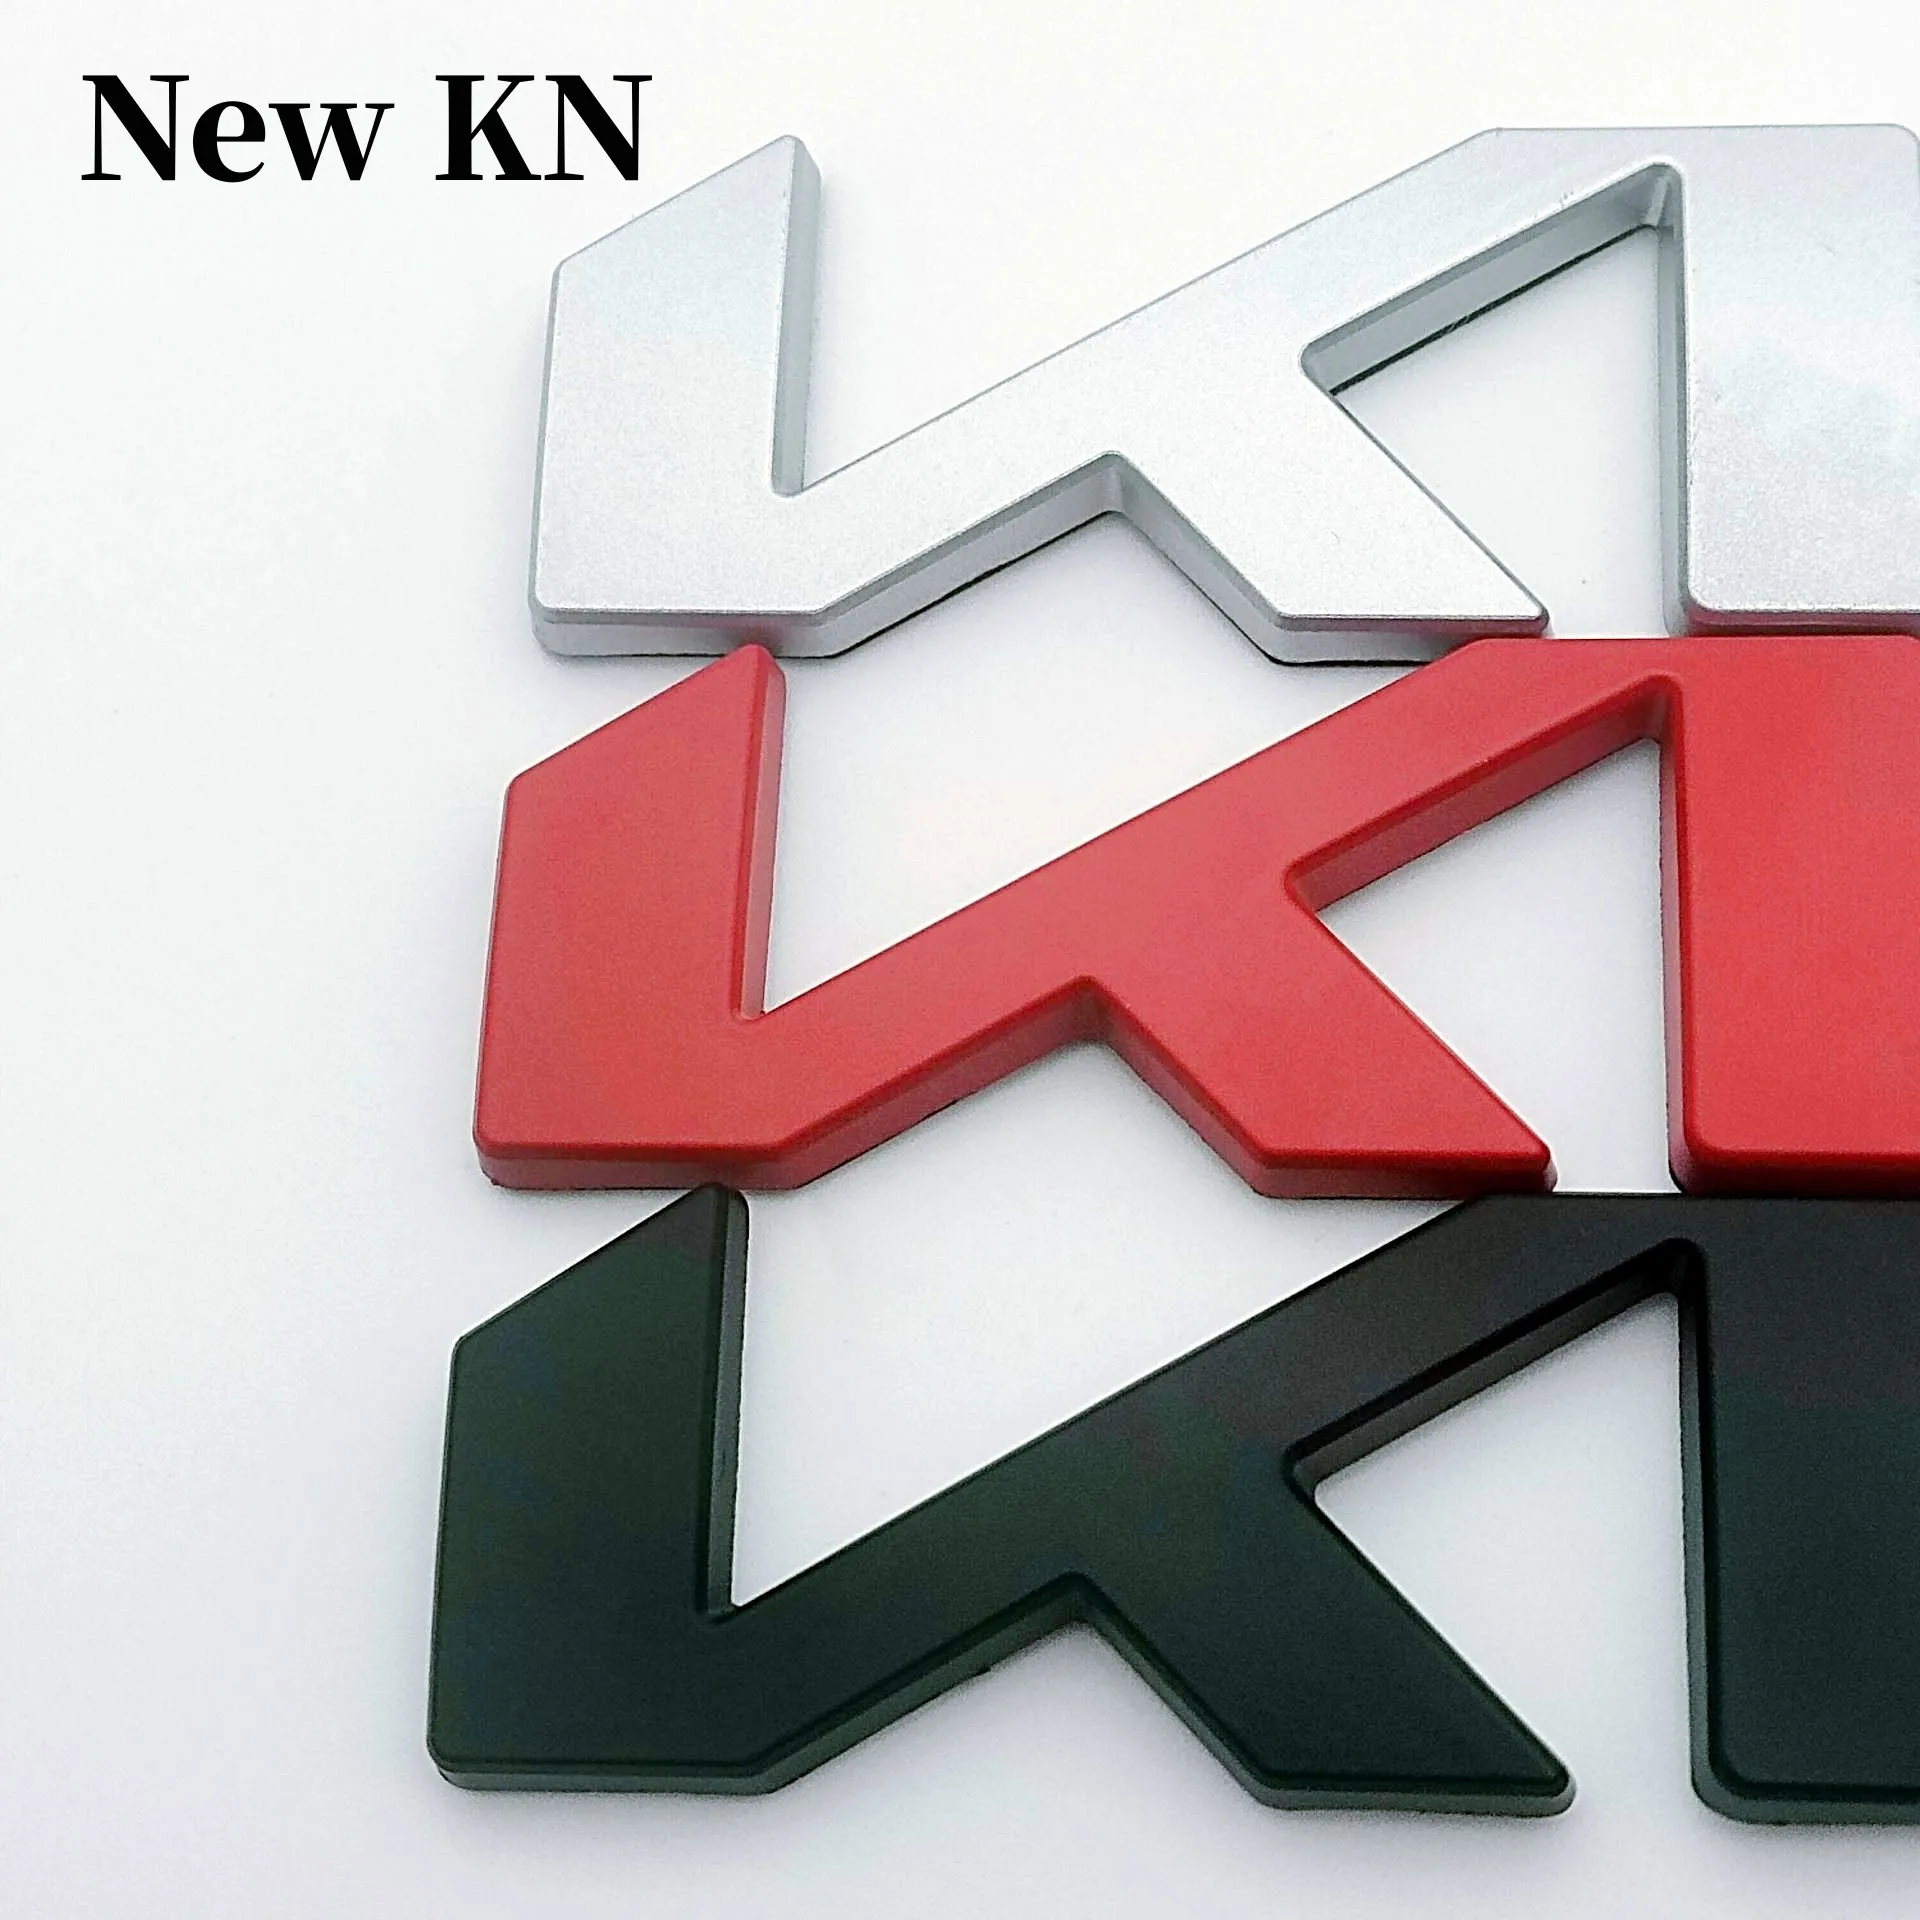 

13cm 15cm 17cm 21cm Metal KN New Black/Silve/Red K-IA K3 K4 K5 K7 K8 KX Four Different Size Car Hood Trunk Emblem Accessories